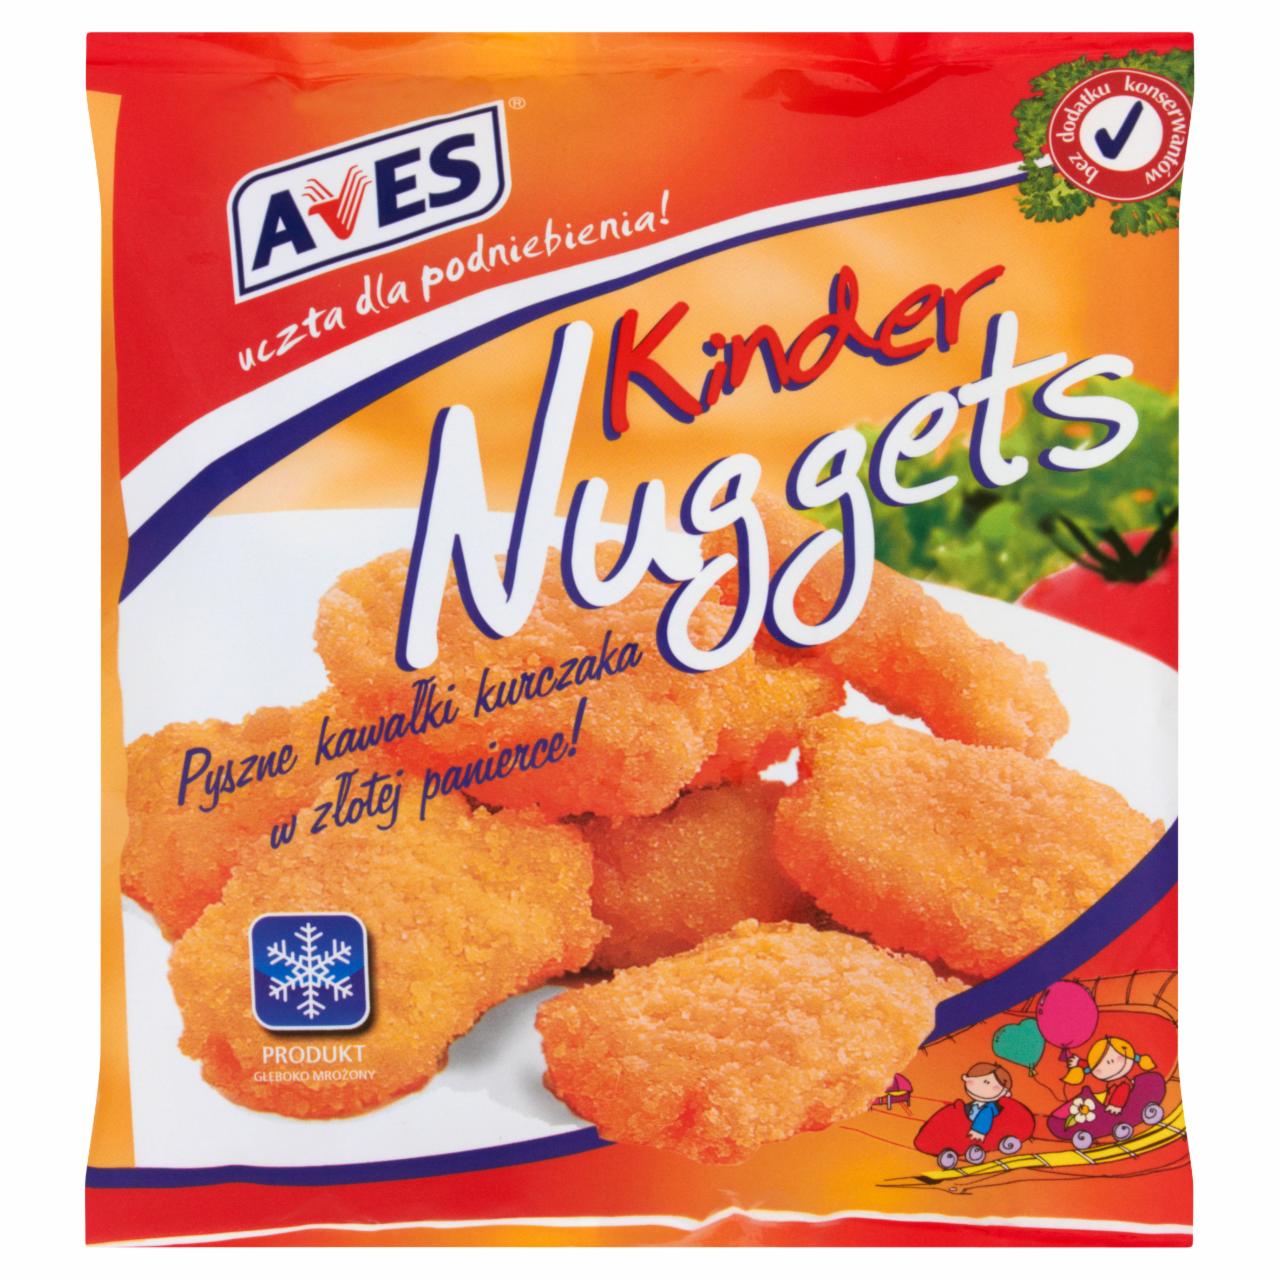 Zdjęcia - Aves Kinder Nuggets 420 g